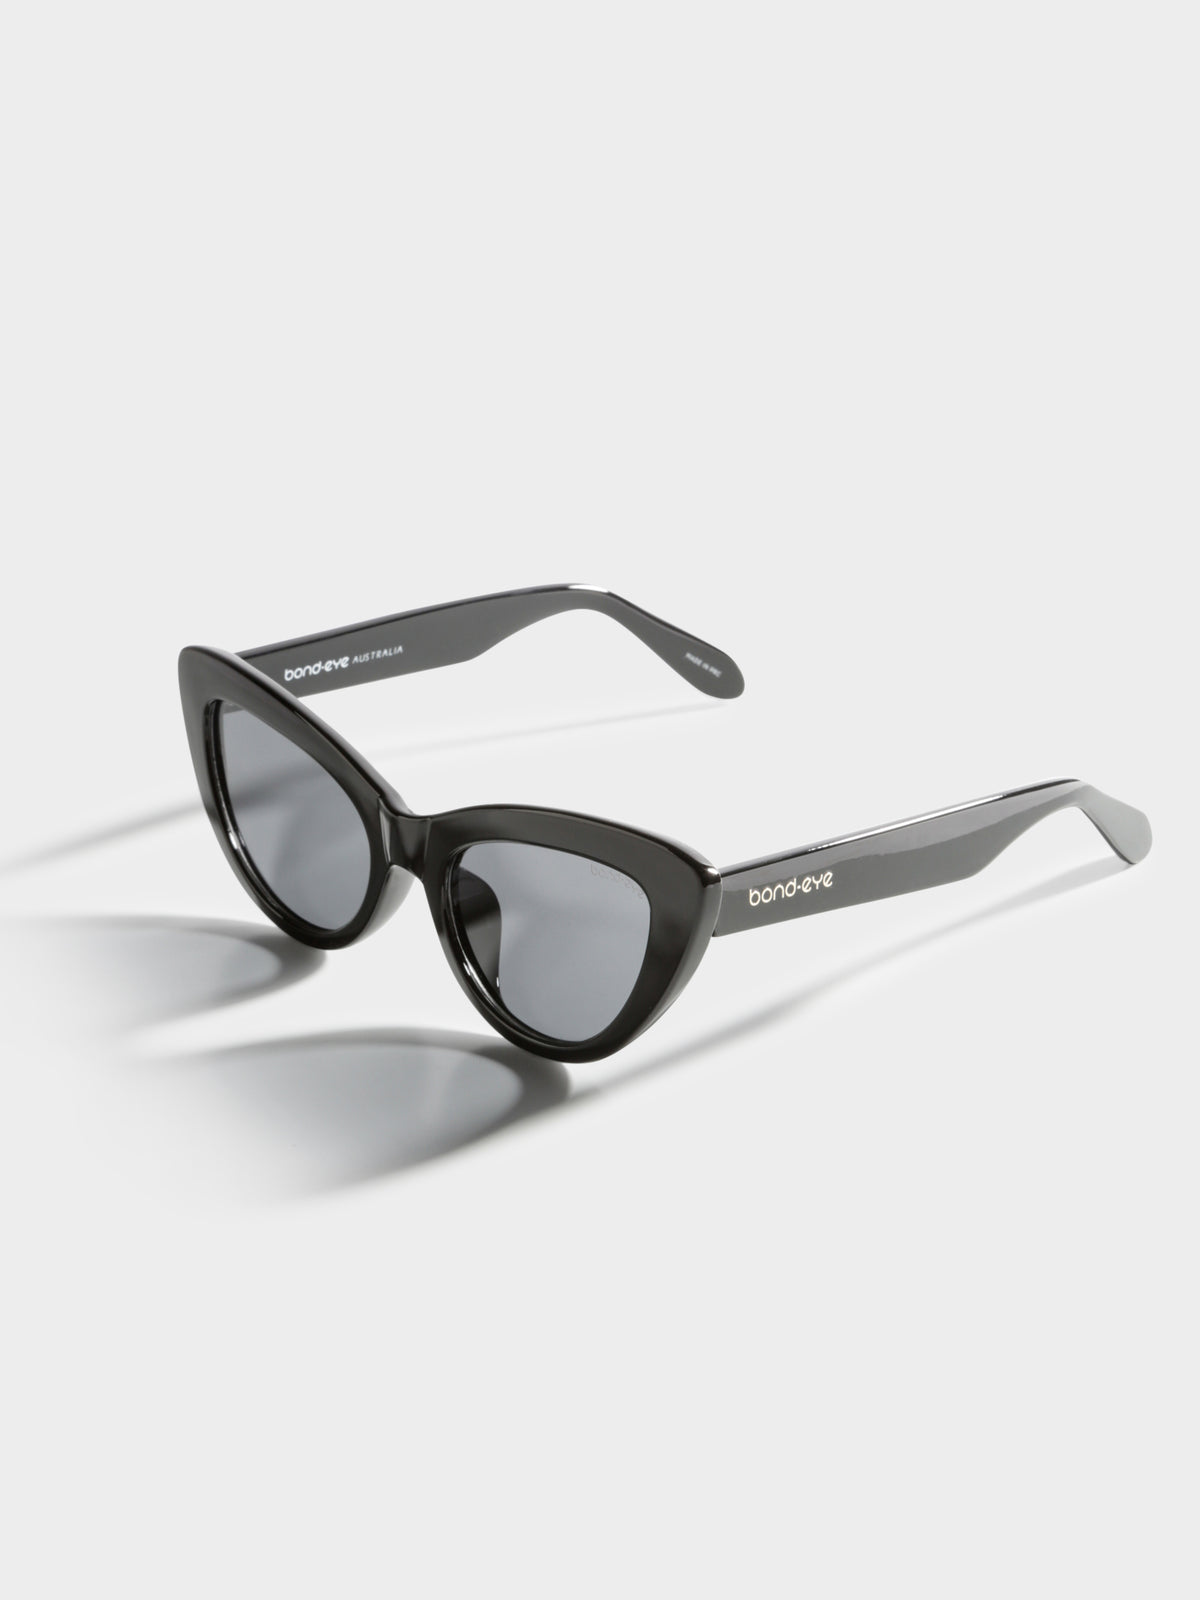 Francis Sunglasses in Black